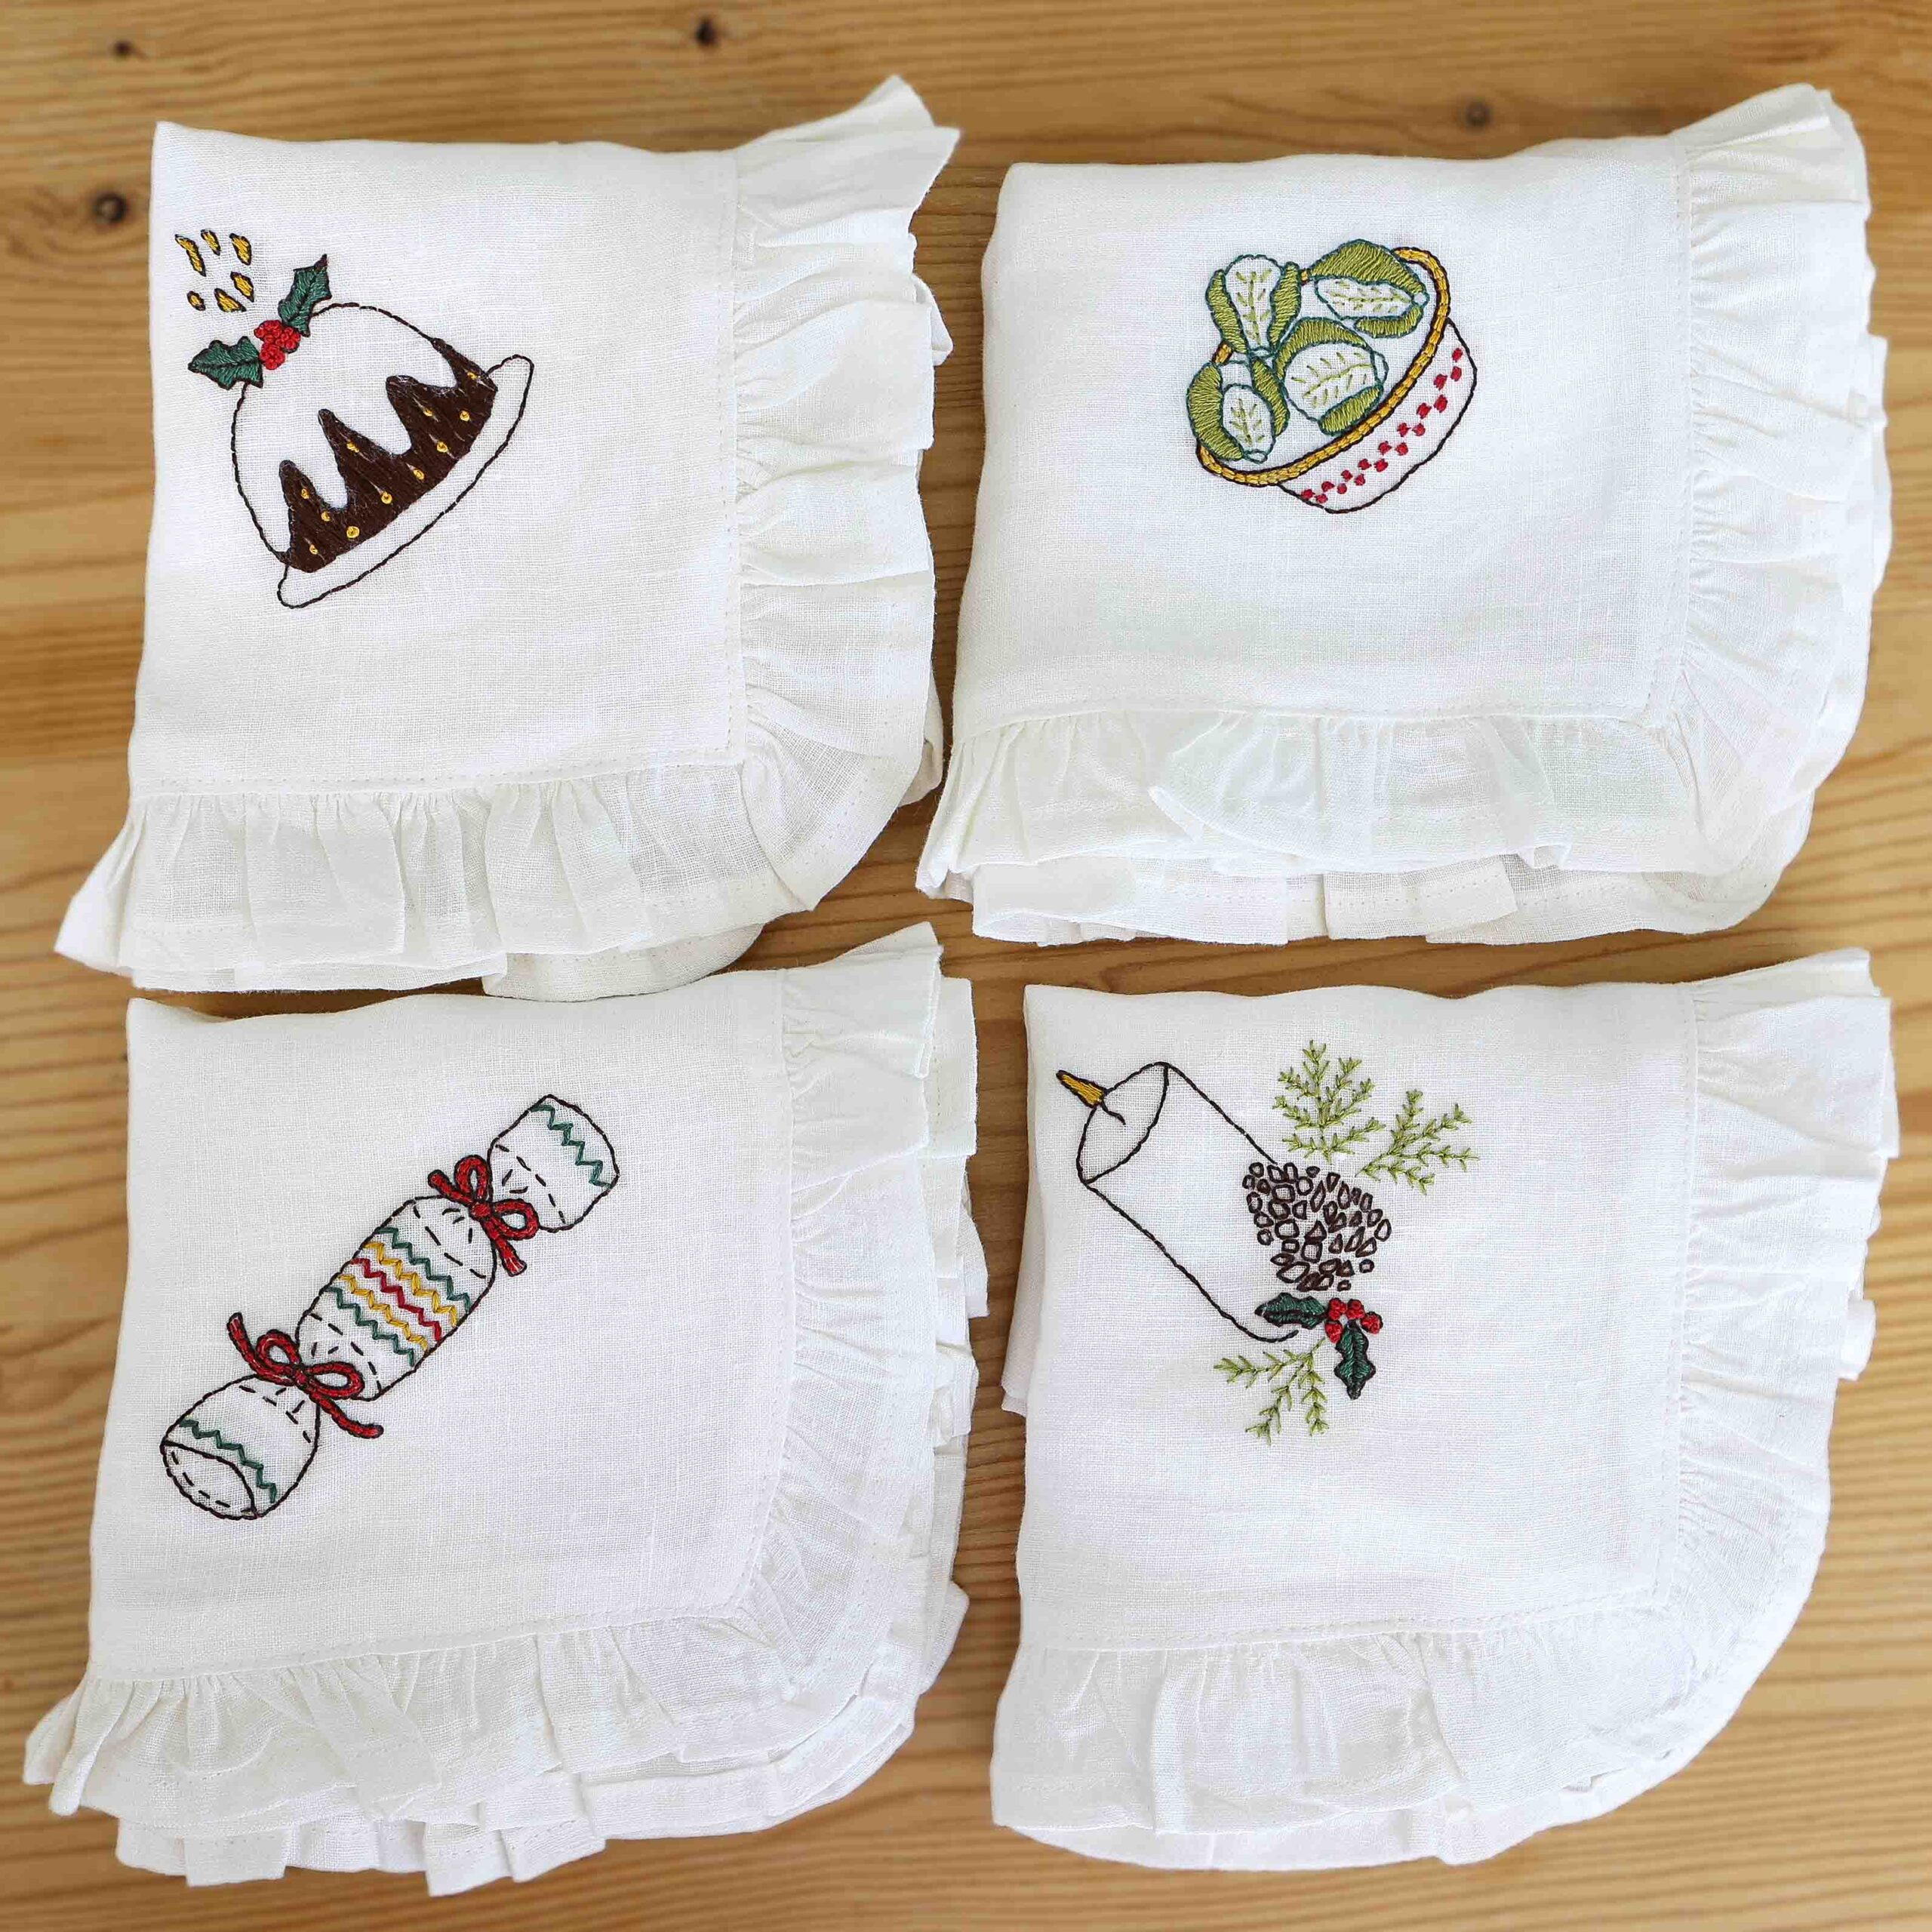 StephieAnn Christmas Napkins hand embroidery kit